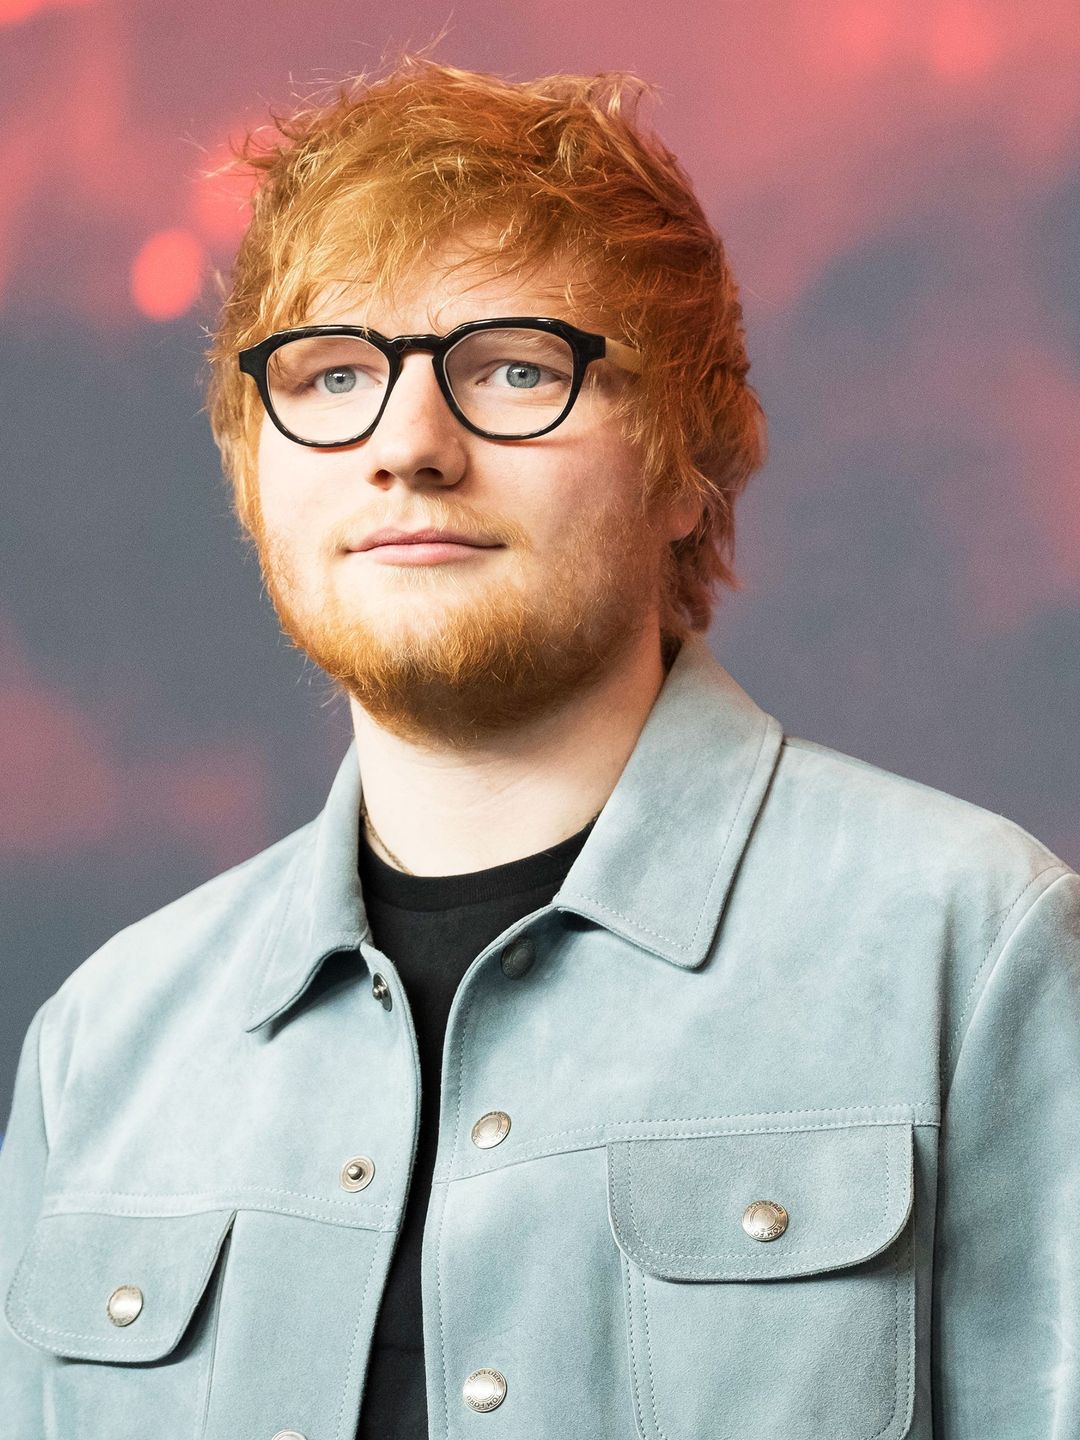 Ed Sheeran ethnicity